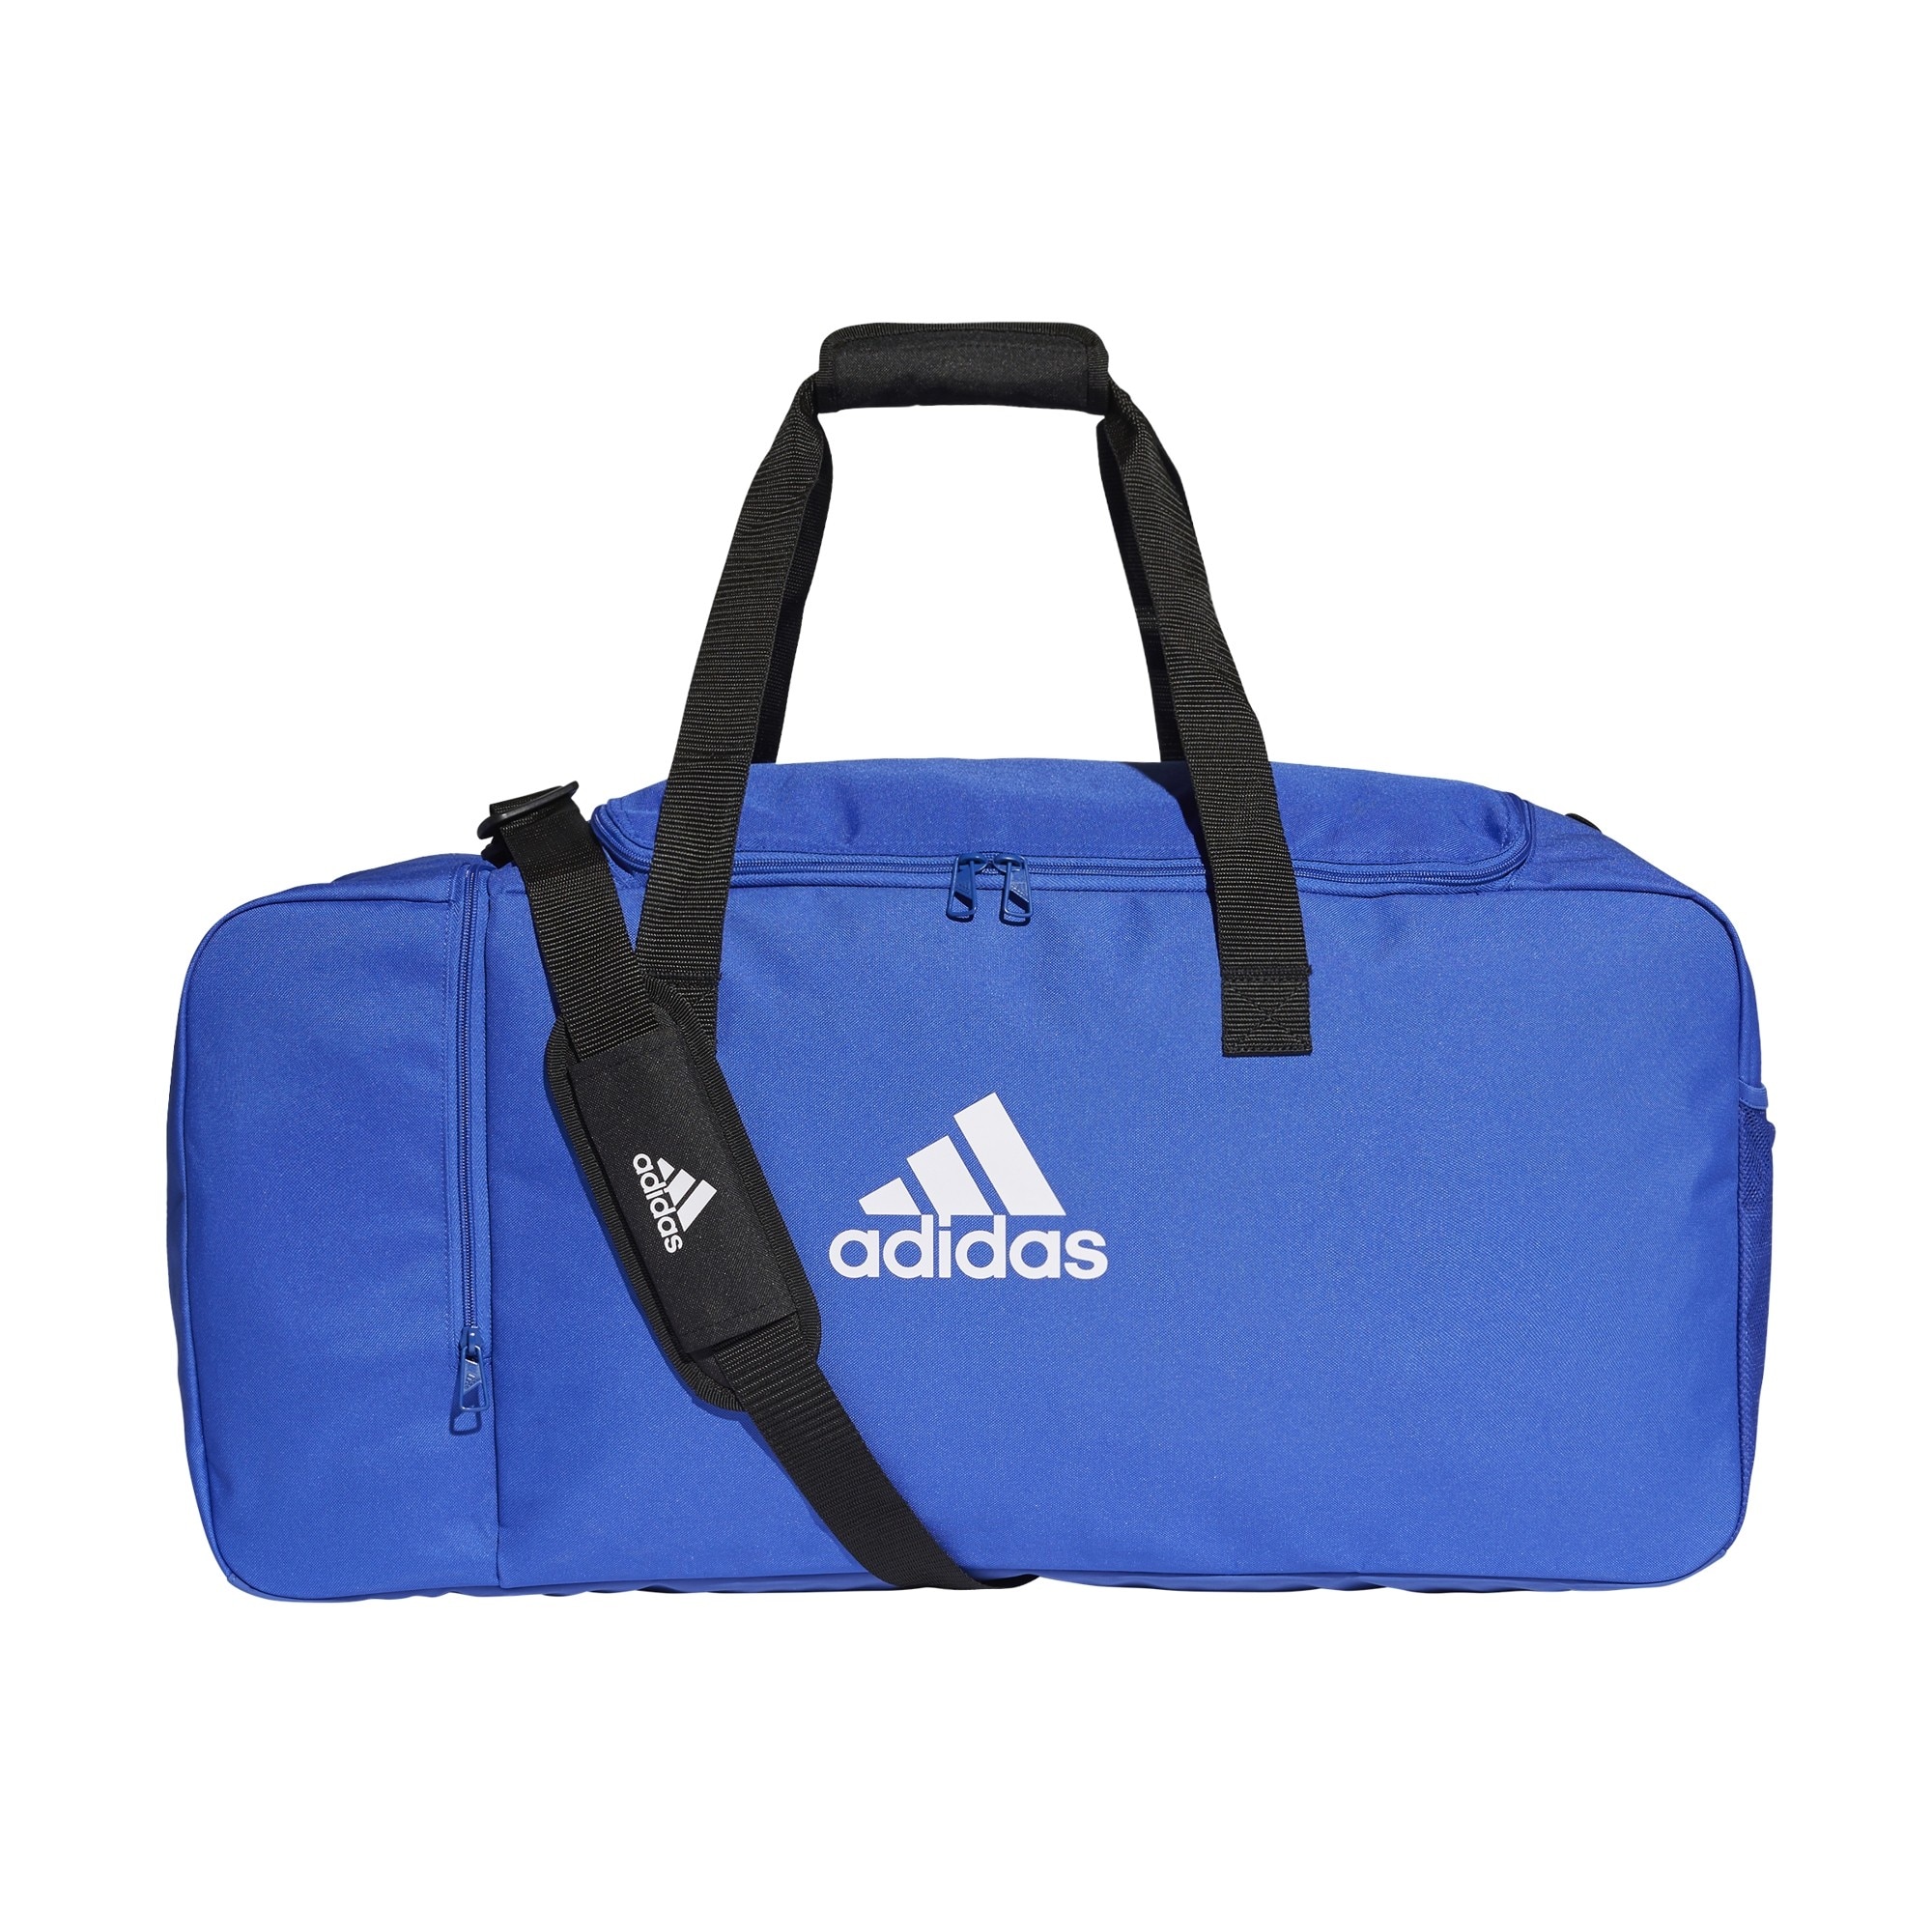 Adidas Tiro 19 Duffle Fotballbag Large